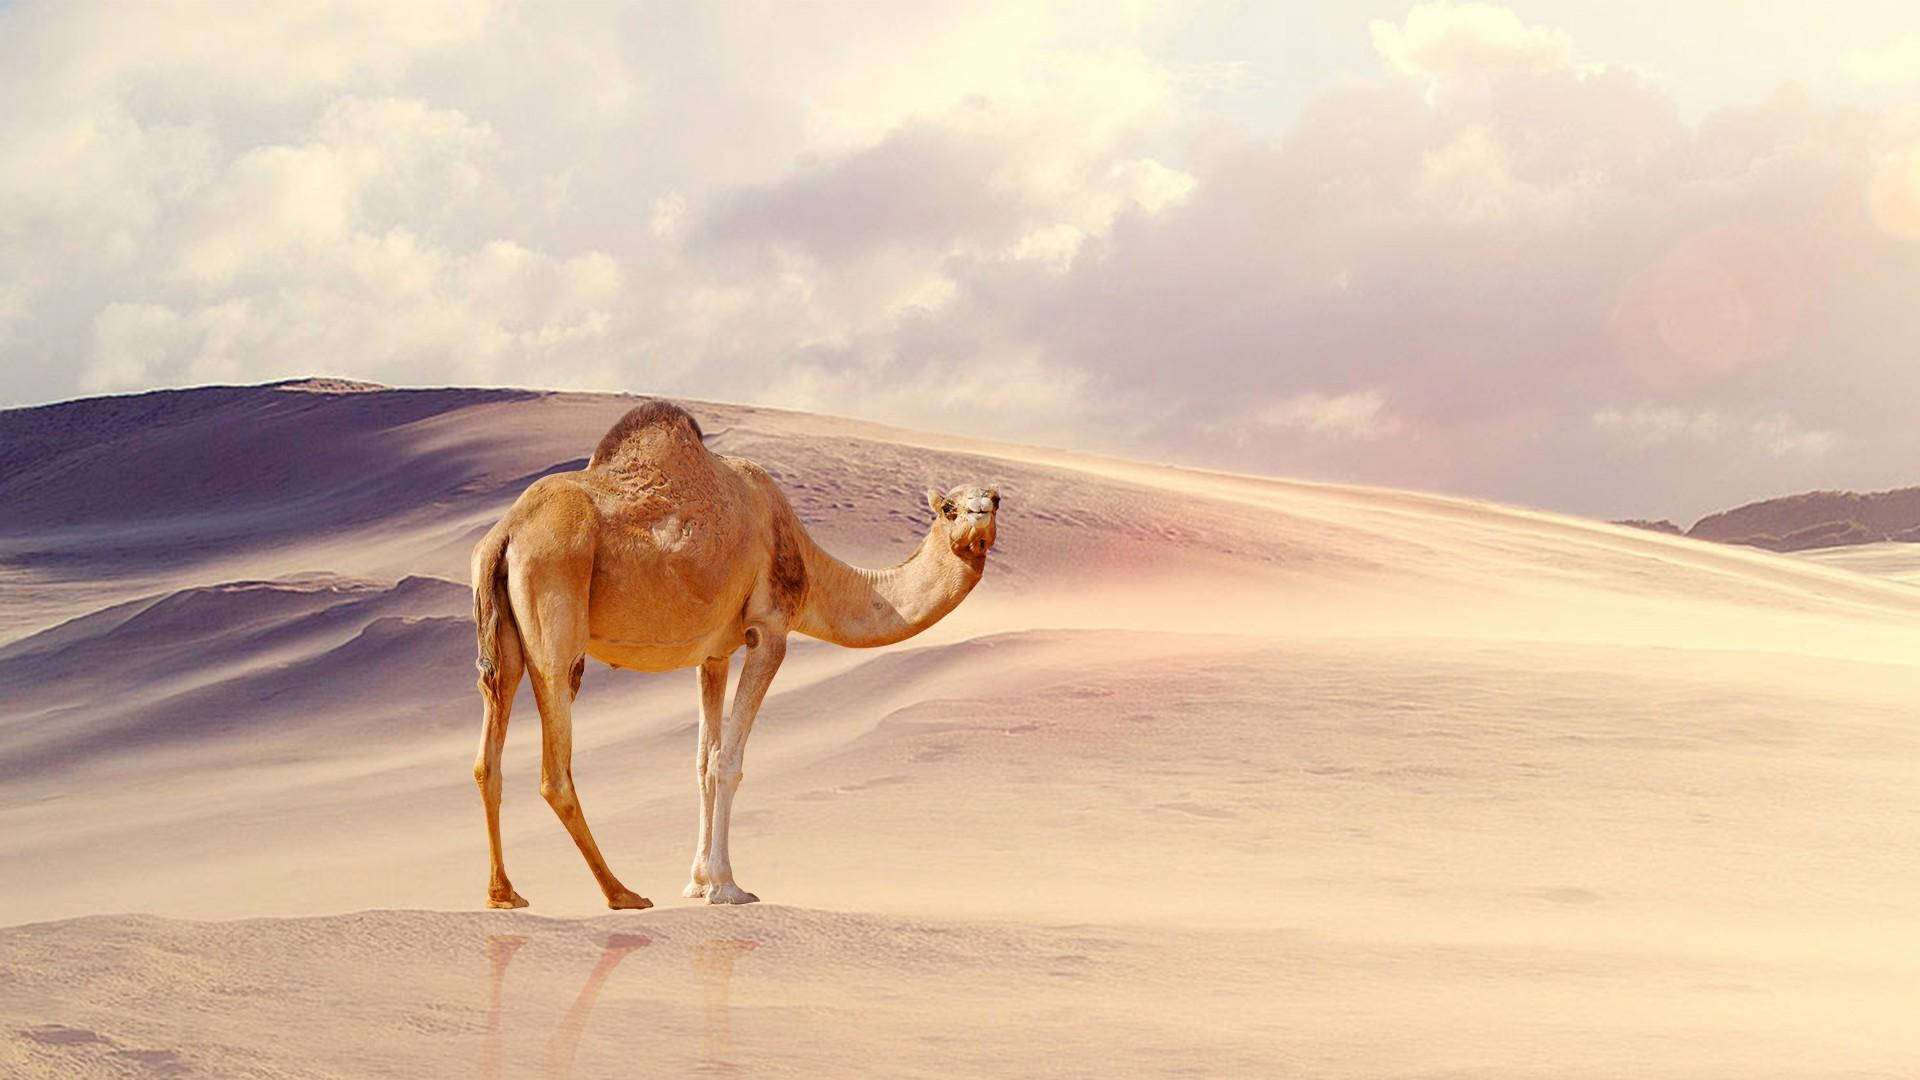 Alone Camel In Desert Background